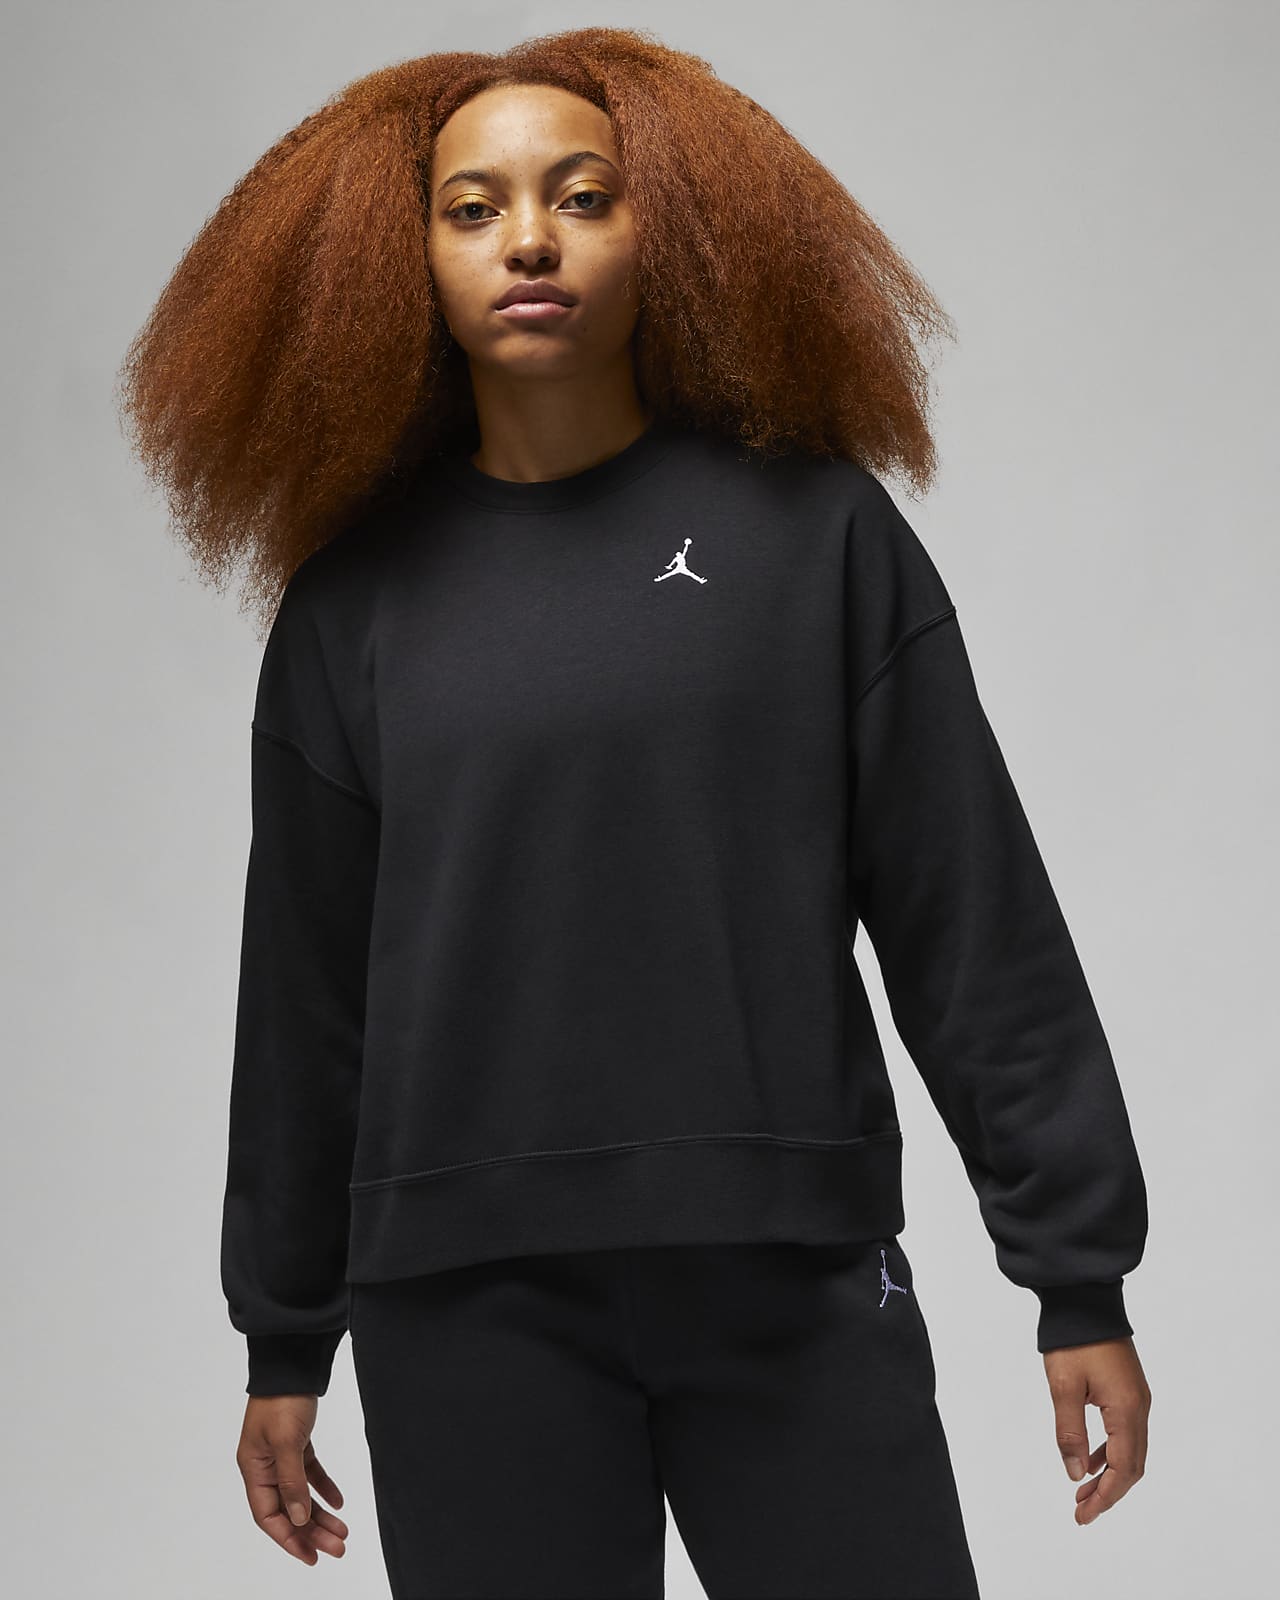 Mondetta Women's Everyday Soft Fleece Crewneck Sweatshirt (Black